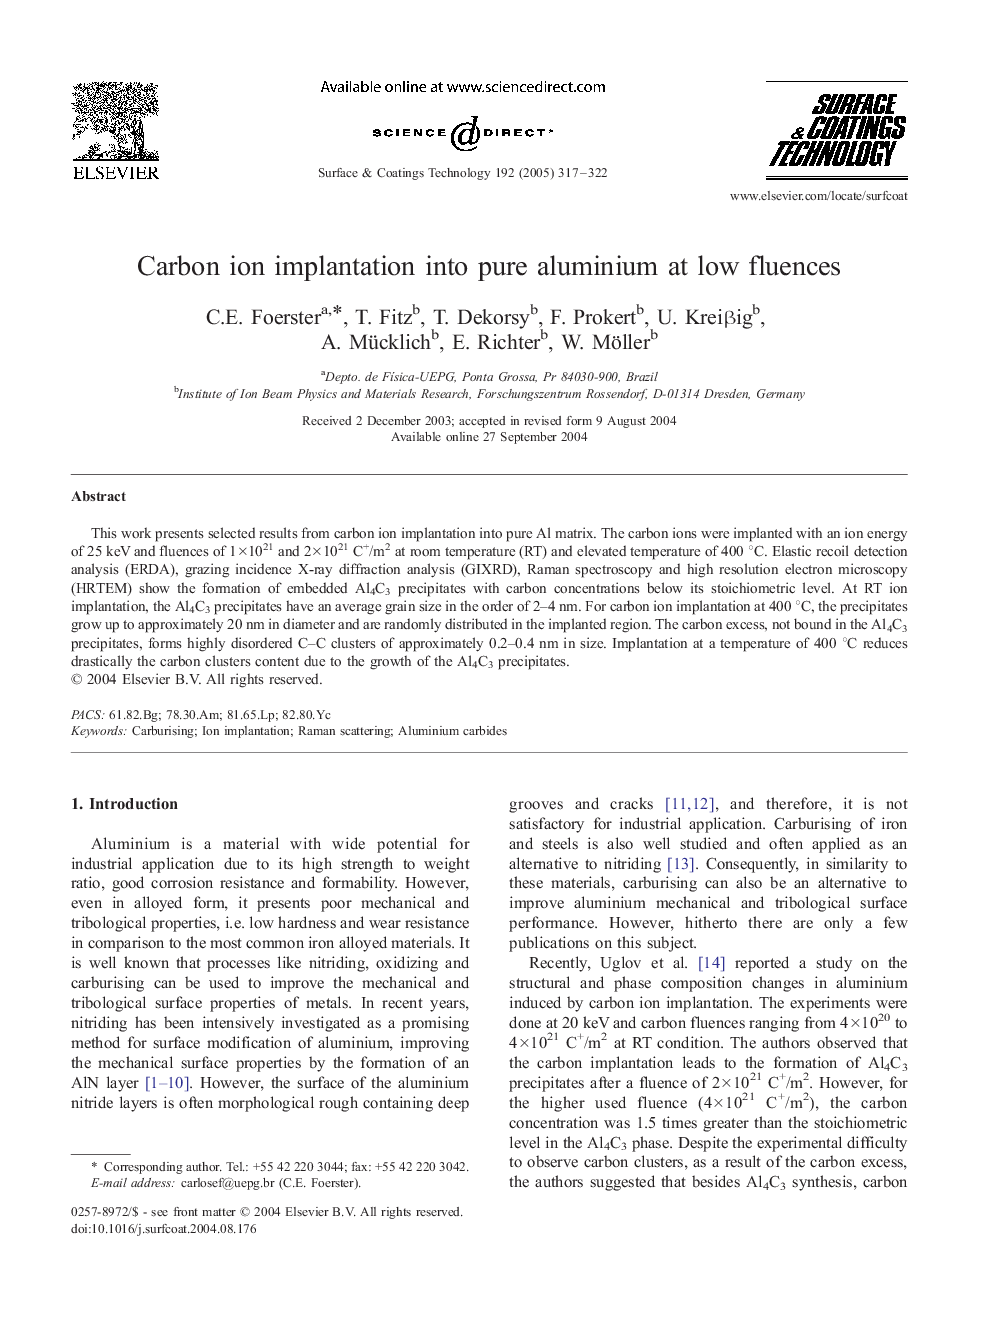 Carbon ion implantation into pure aluminium at low fluences